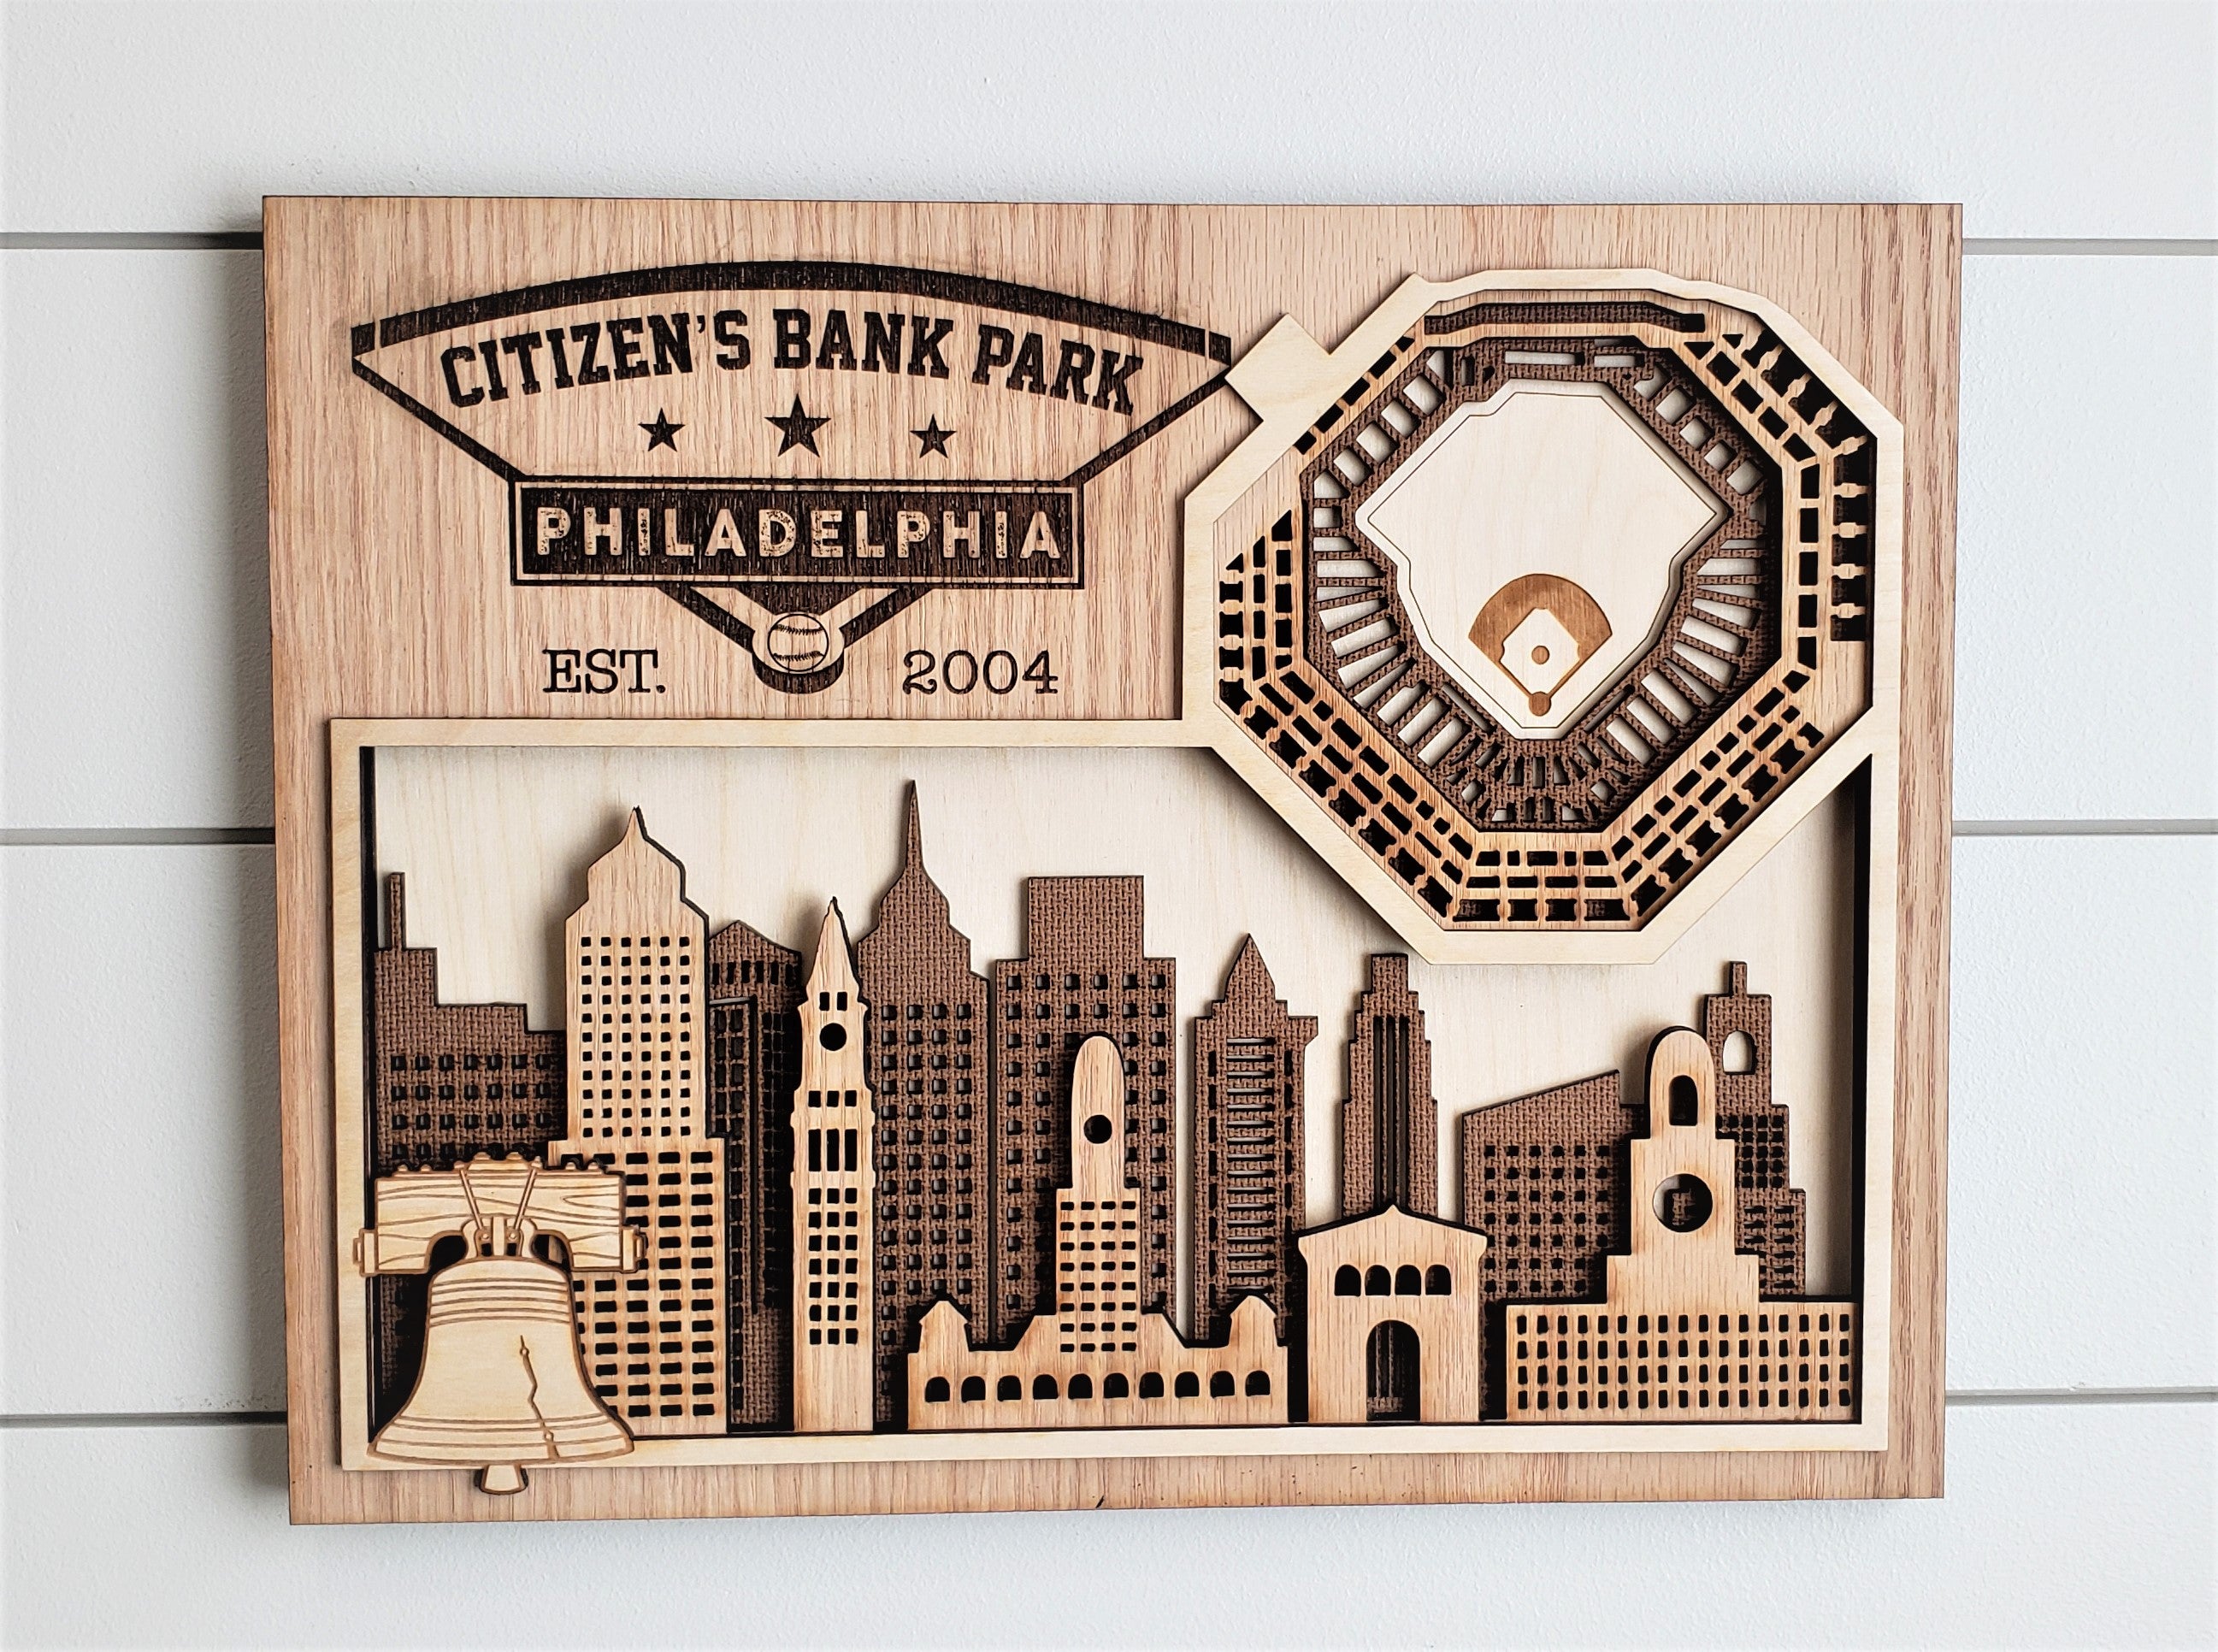 Citizen's Bank Park - Home of the Philadelphia Phillies